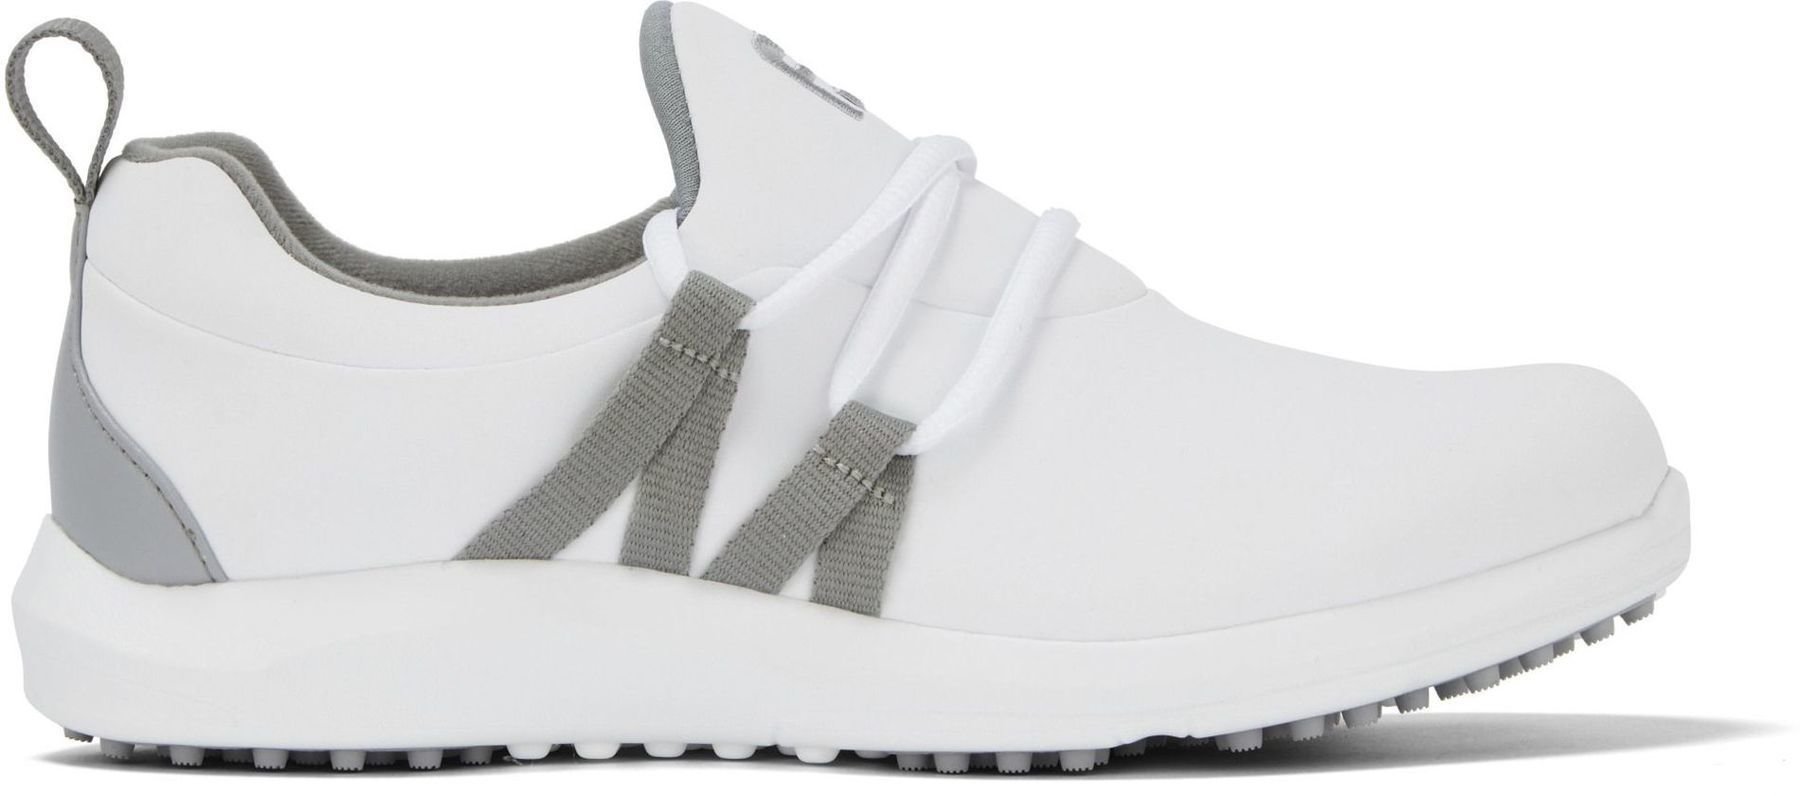 Women's golf shoes Footjoy Leisure Slip On White/Grey 40